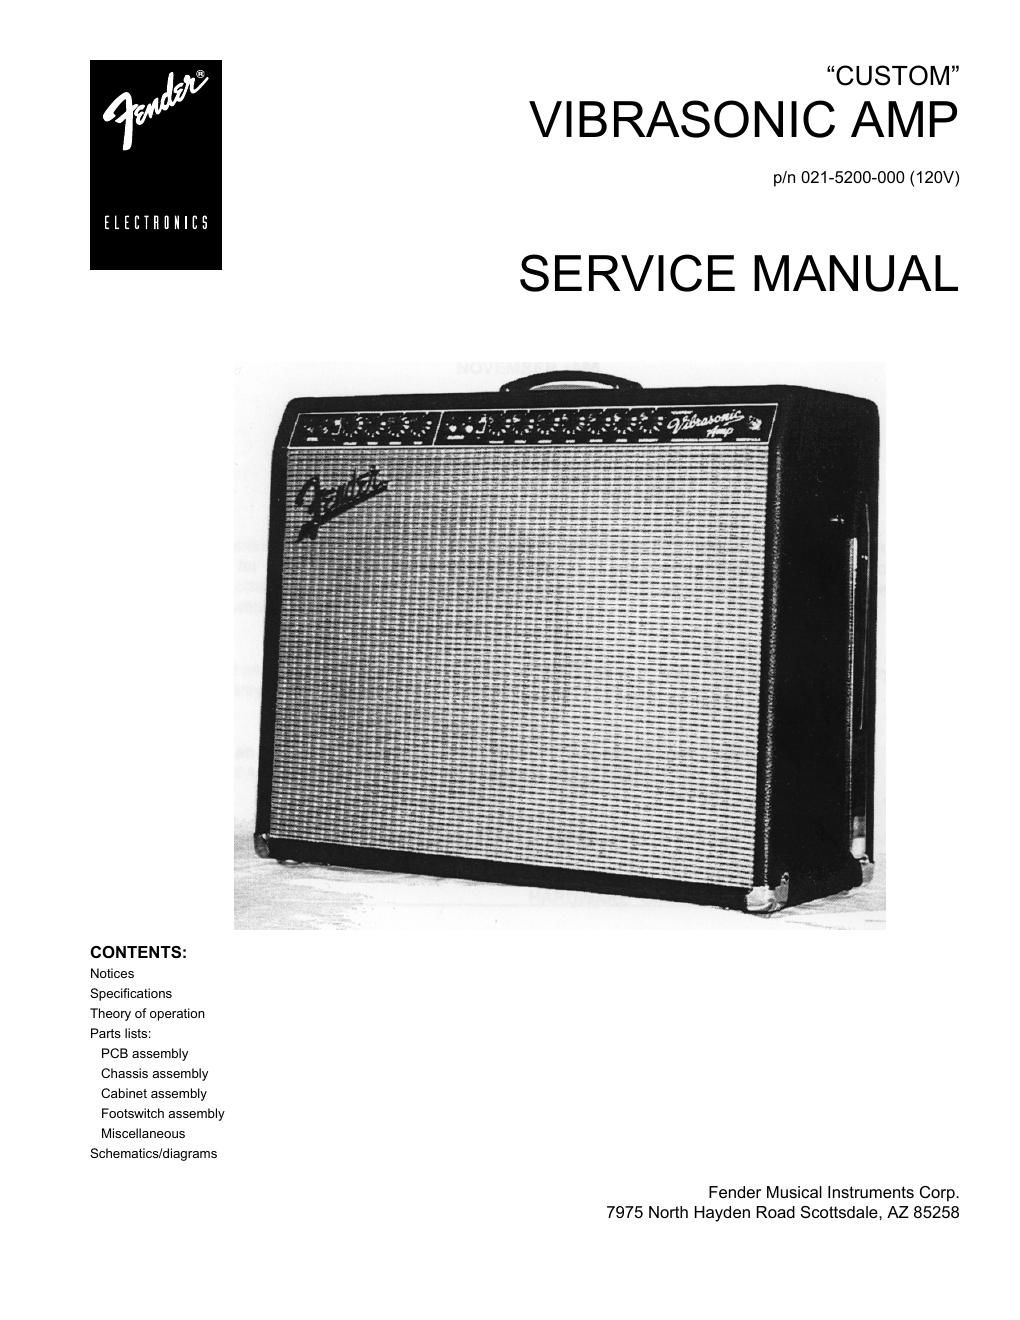 fender vibrasonic service manual